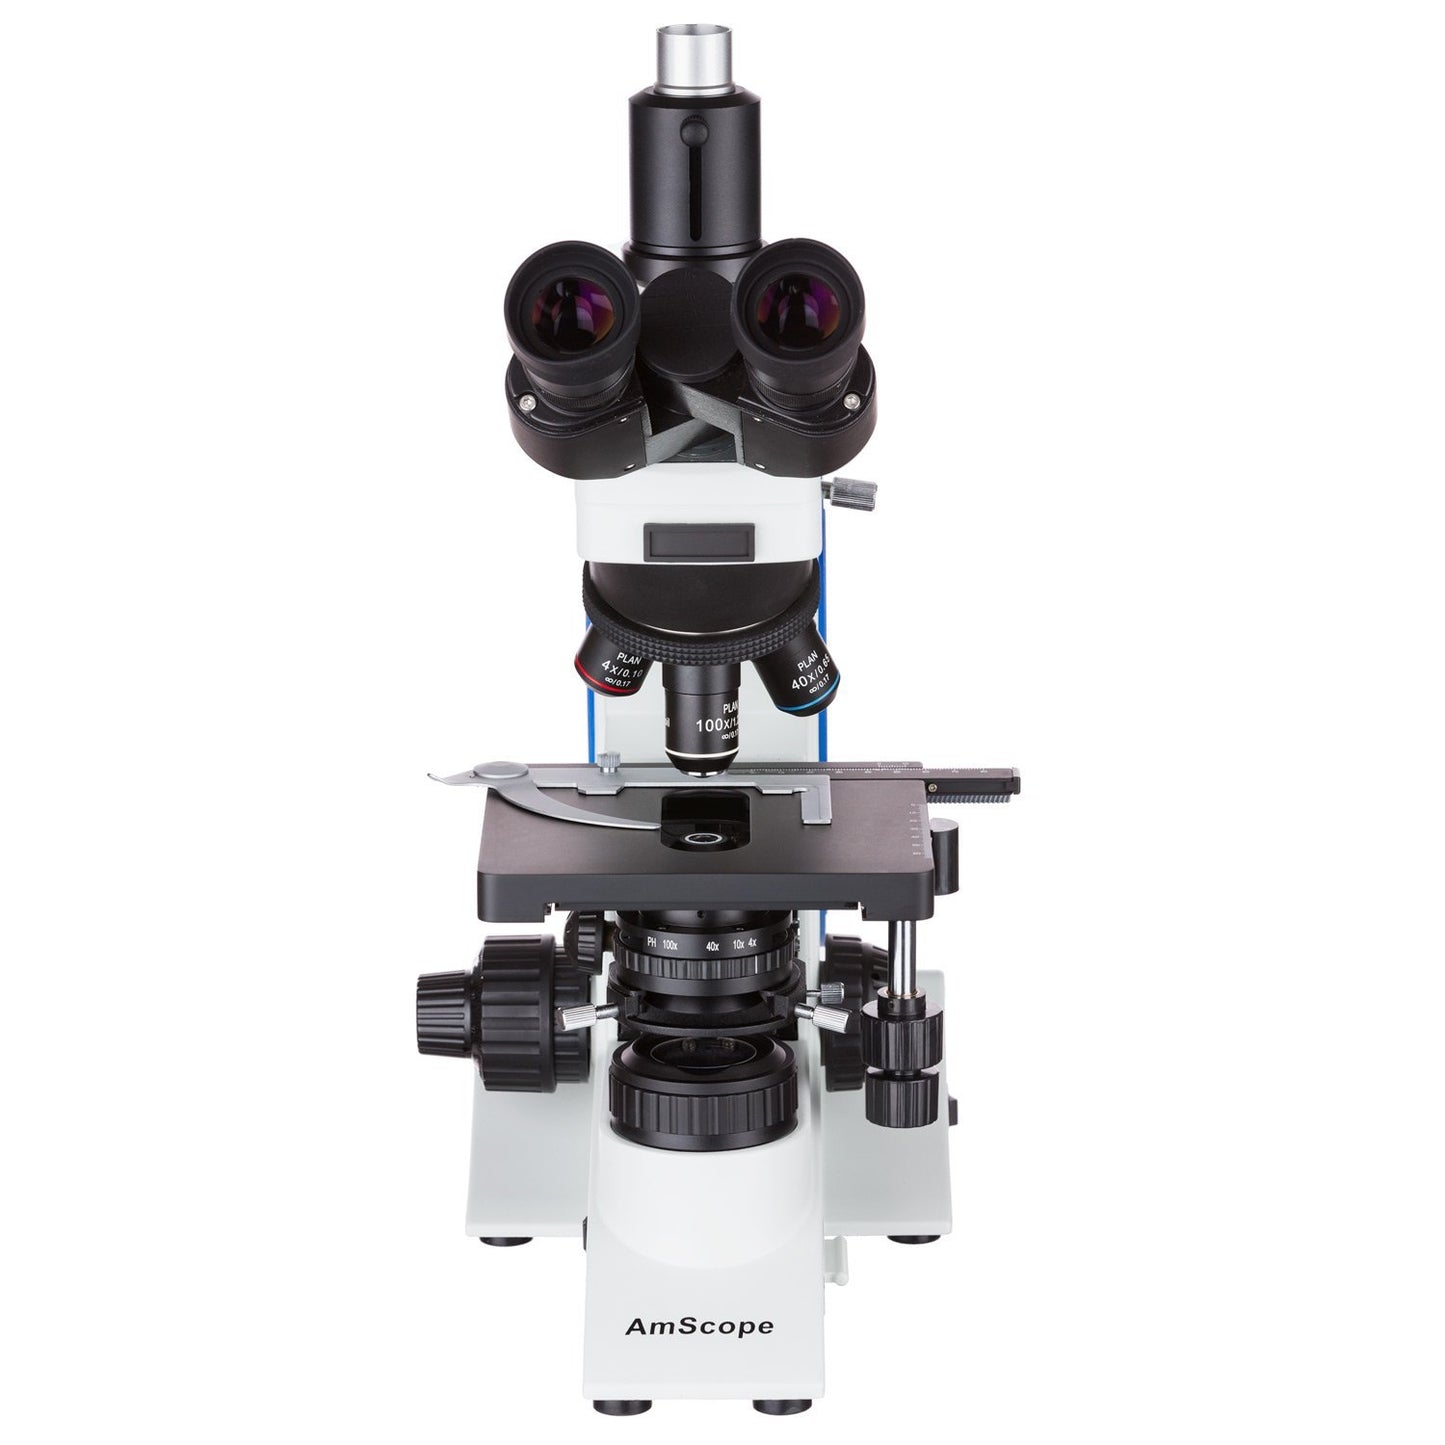 AmScope 40X-1000X Plan Infinity Kohler Laboratory Research Microscope + 5MP USB3.0 Camera